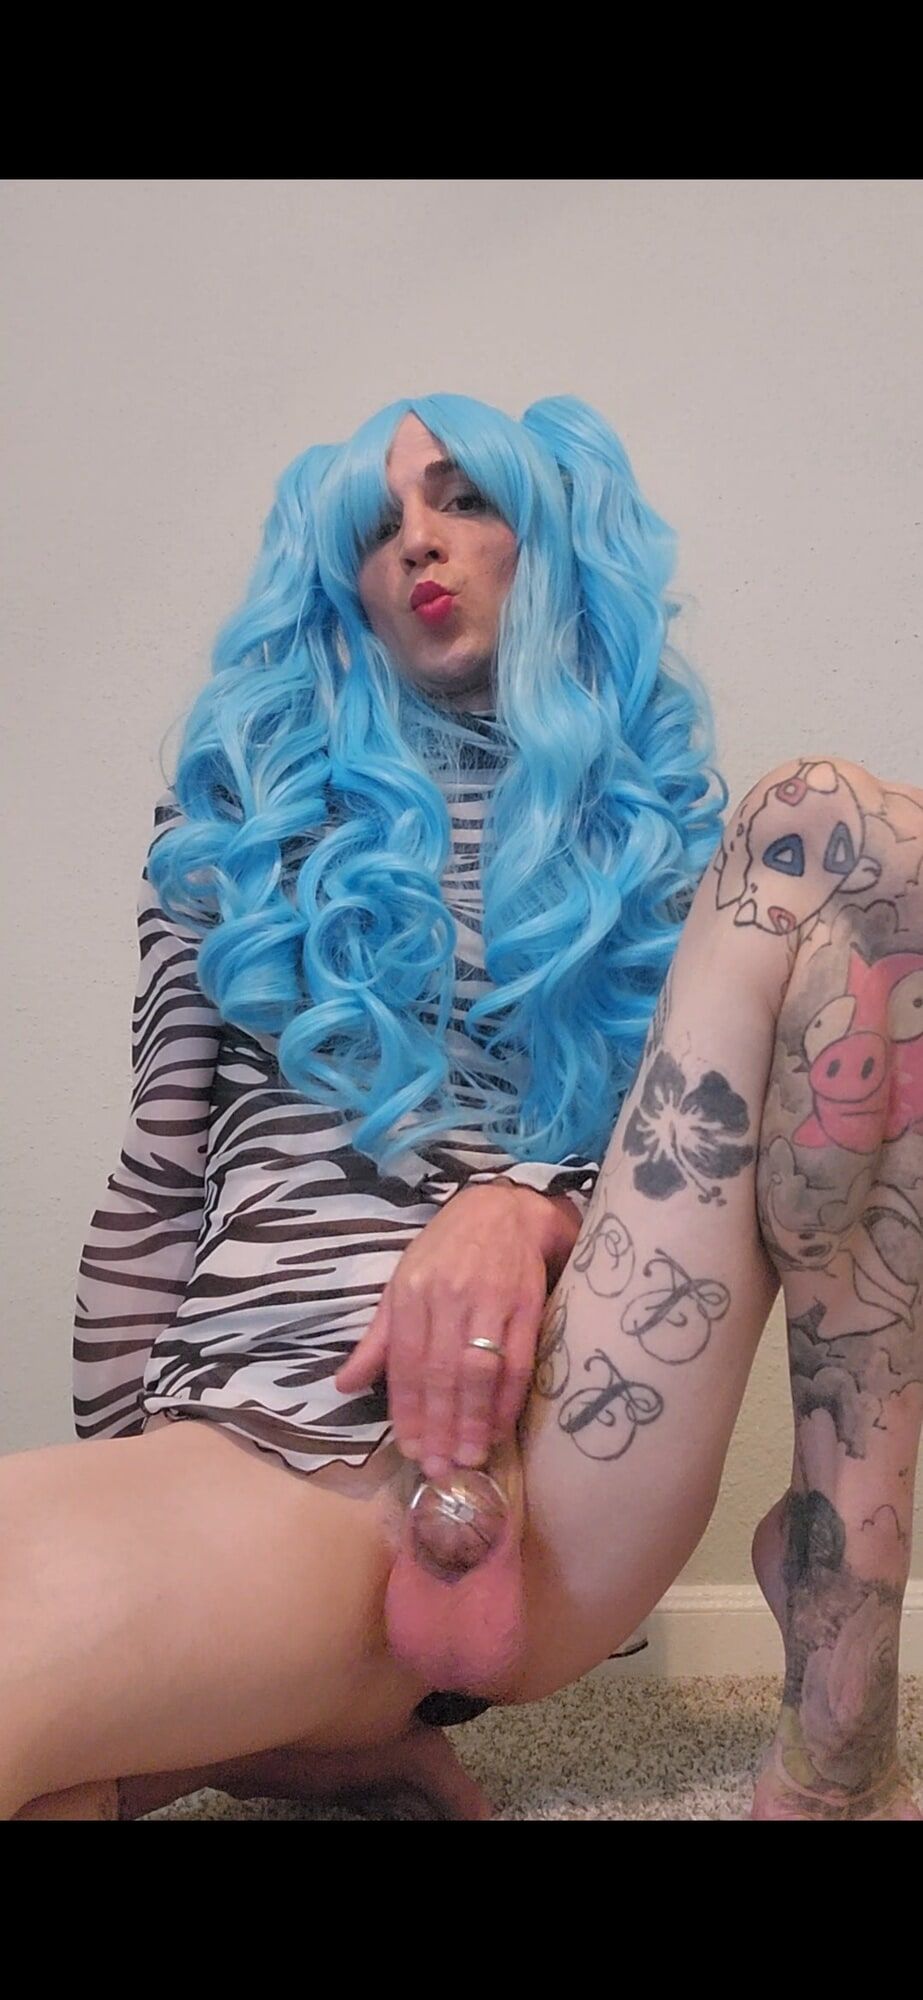 Blue wig and zebra print dress